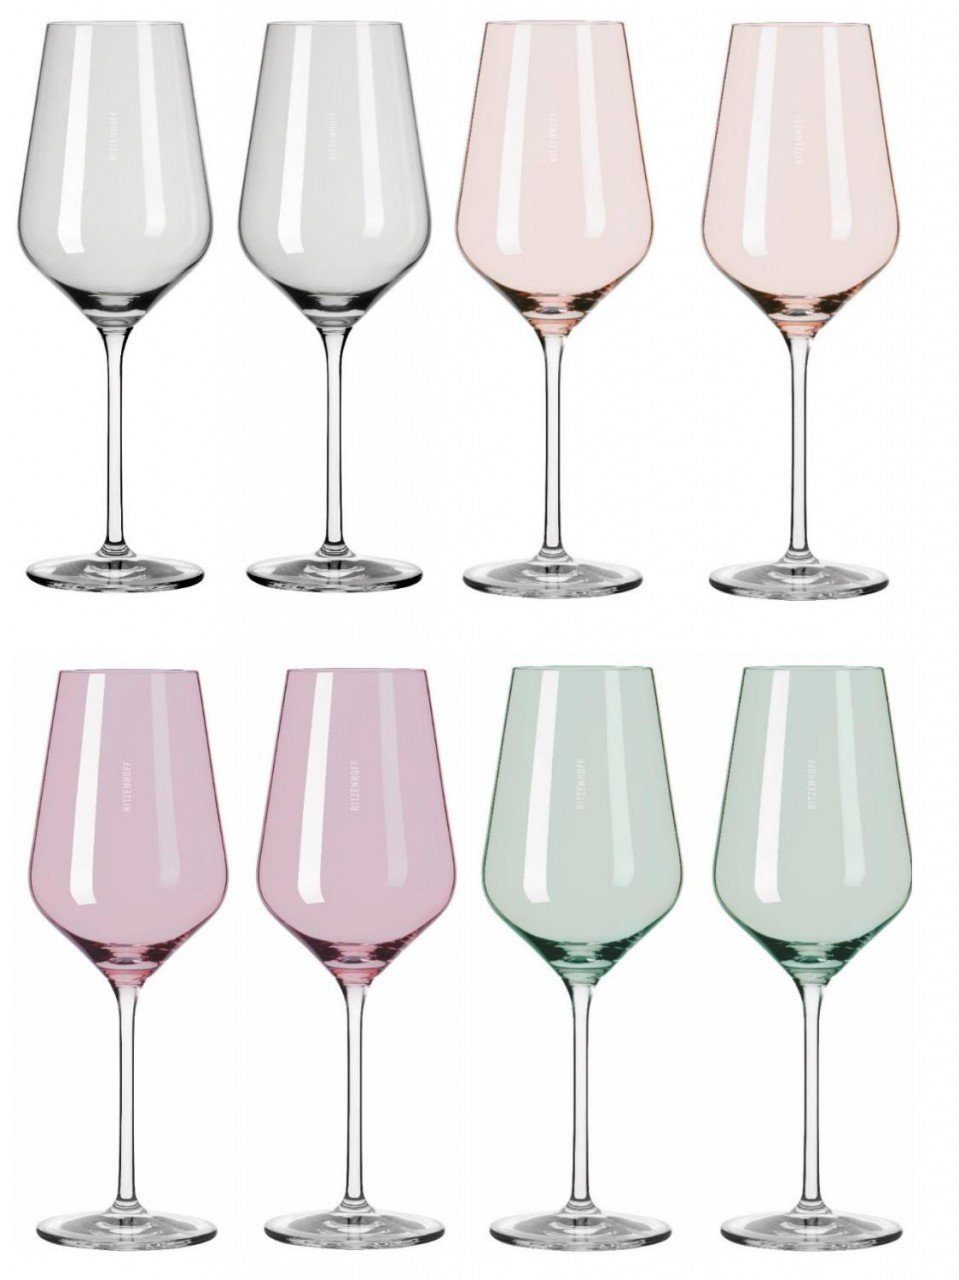 Ritzenhoff Weinglas Fjordlicht, Glas, Mehrfarbig H:22.5cm D:8cm Glas